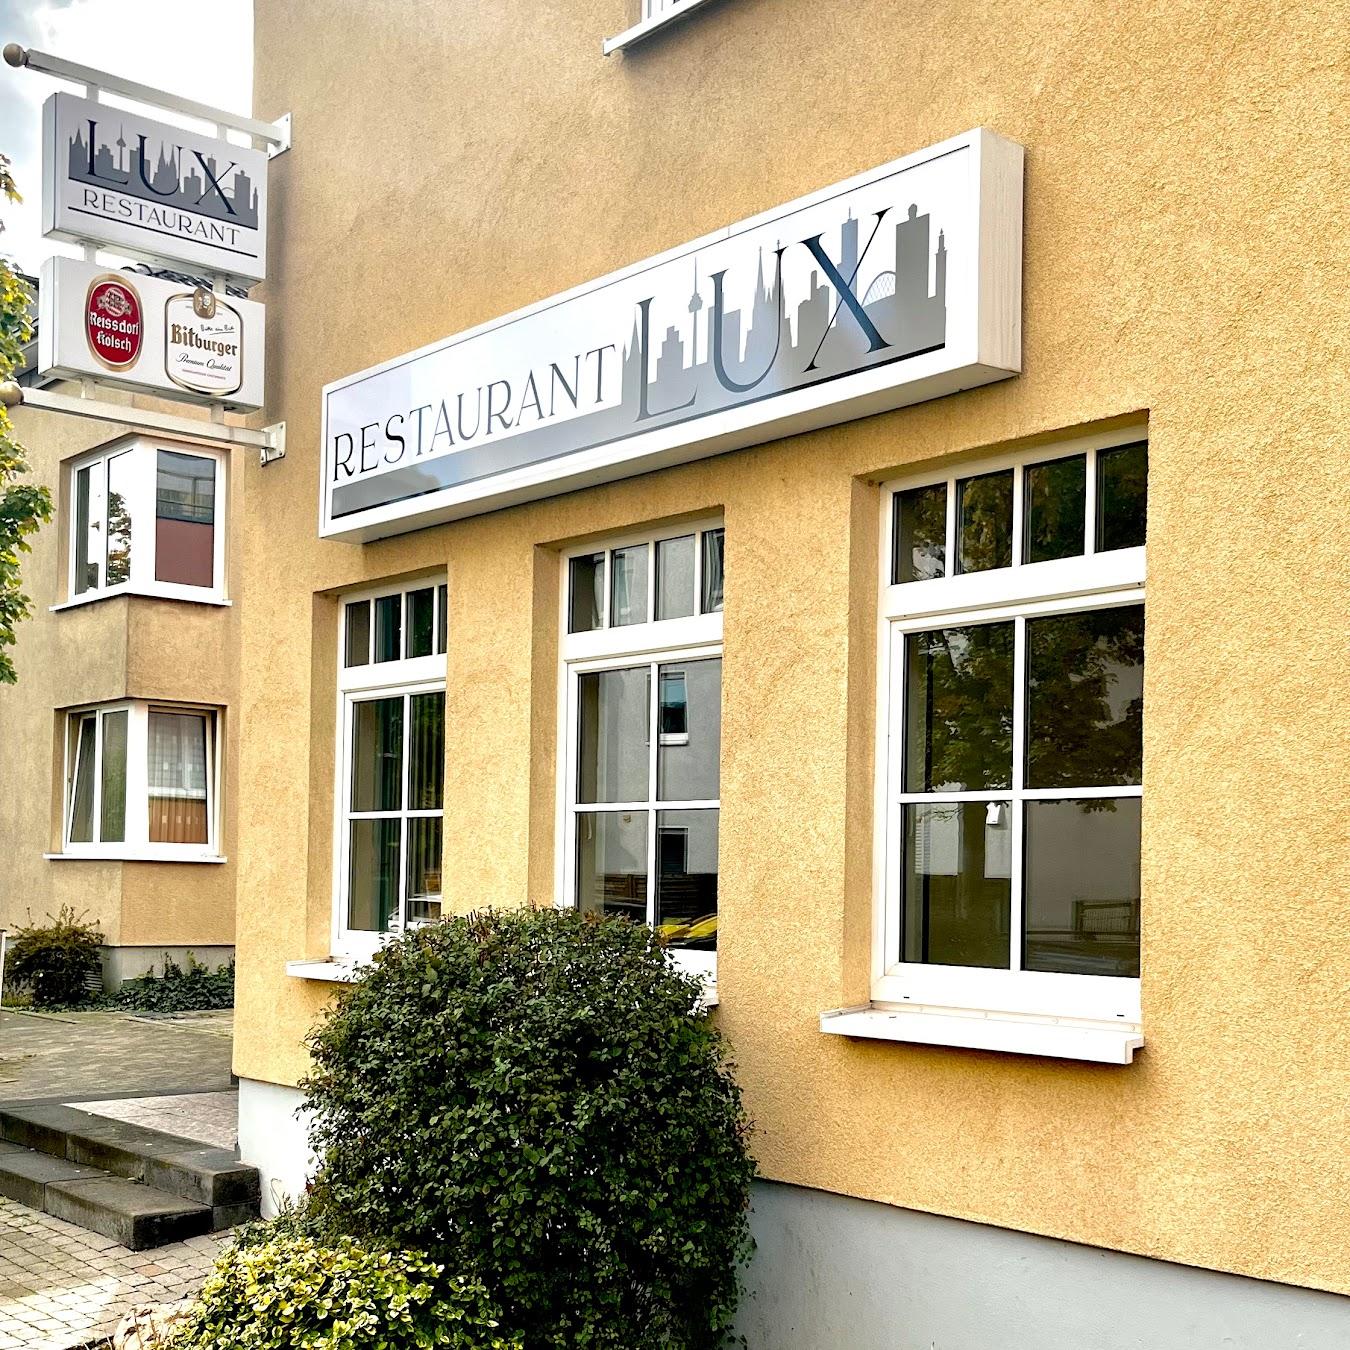 Restaurant "RestaurantLUX" in Niederkassel